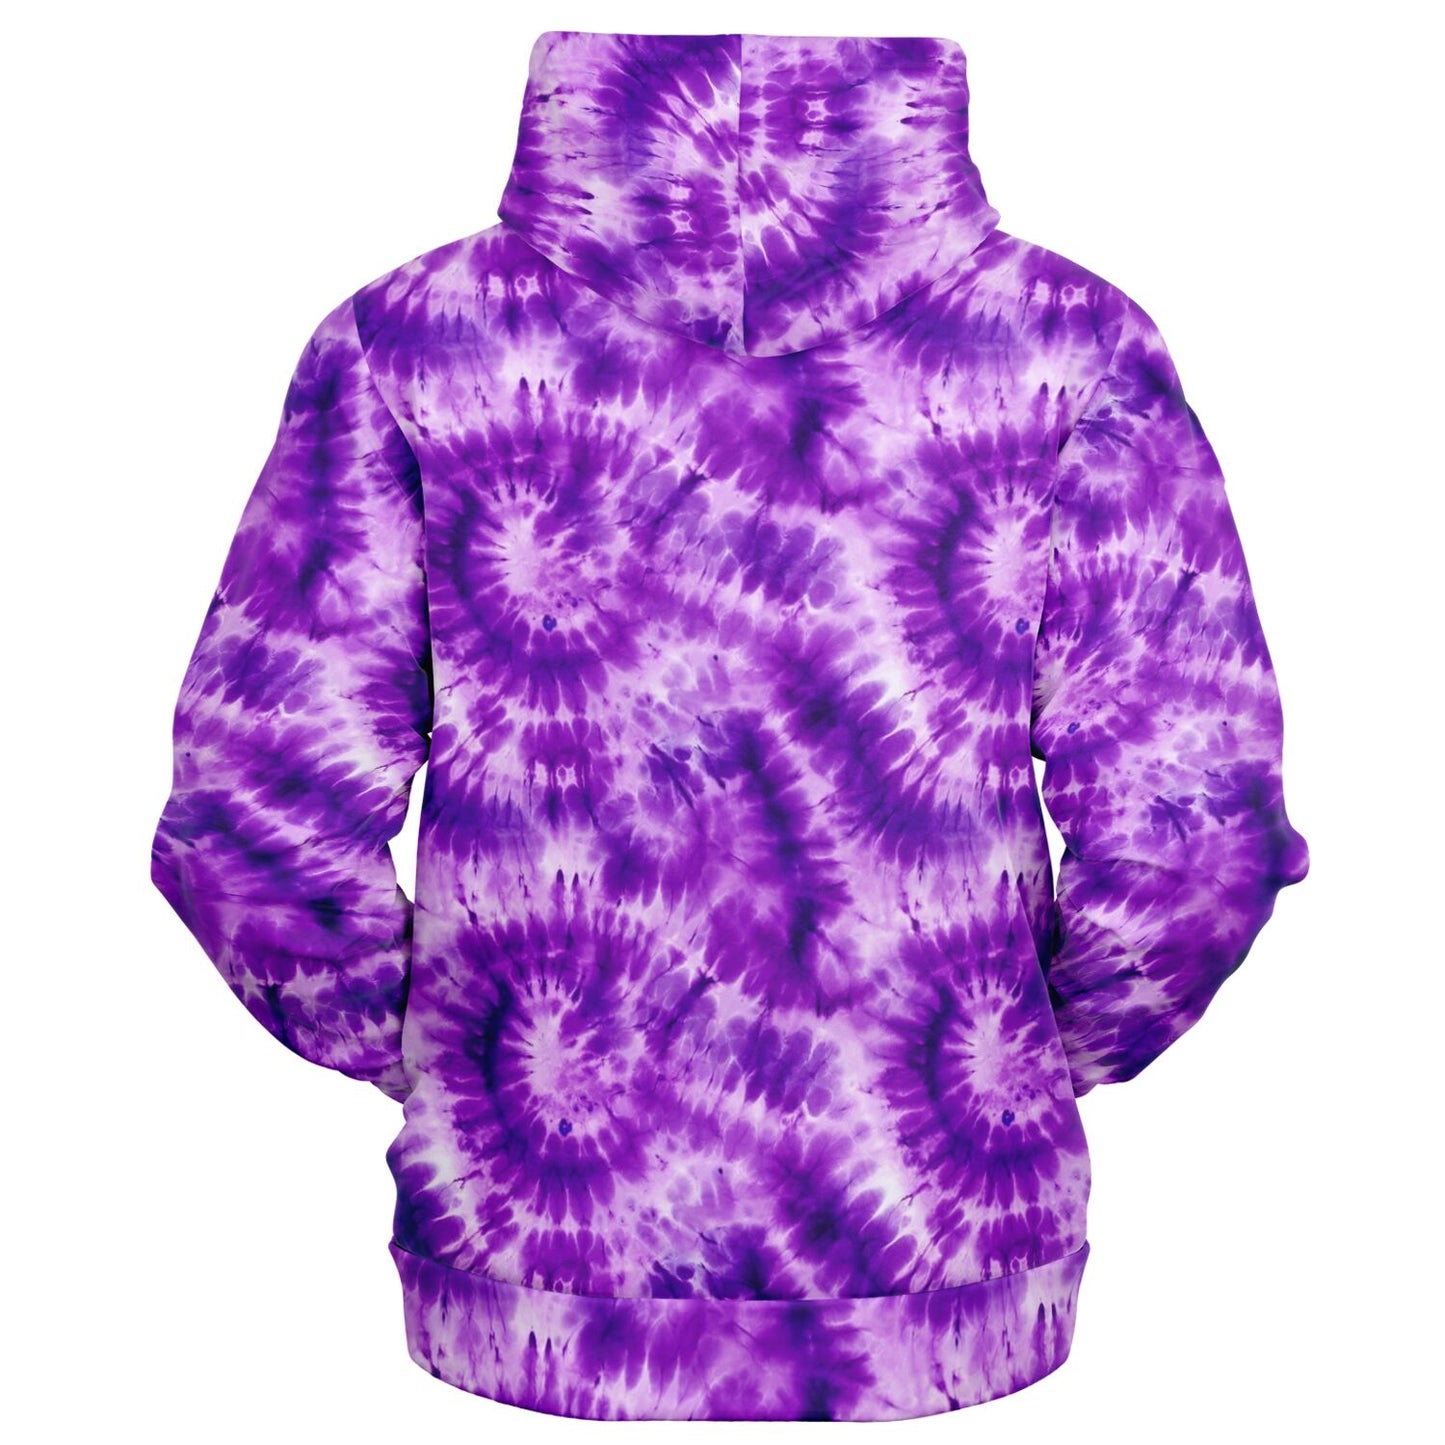 Purple Tie Dye Zip Up Hoodie, Front Zipper Pocket Men Women Unisex Adult Aesthetic Graphic Cotton Fleece Hooded Sweatshirt Starcove Fashion